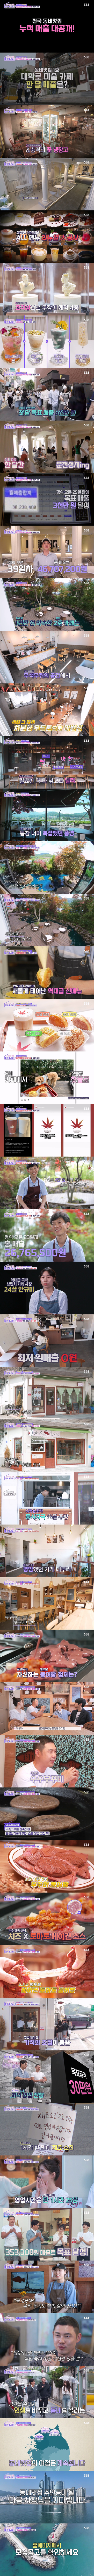 SBS entertainment show that pays off debts